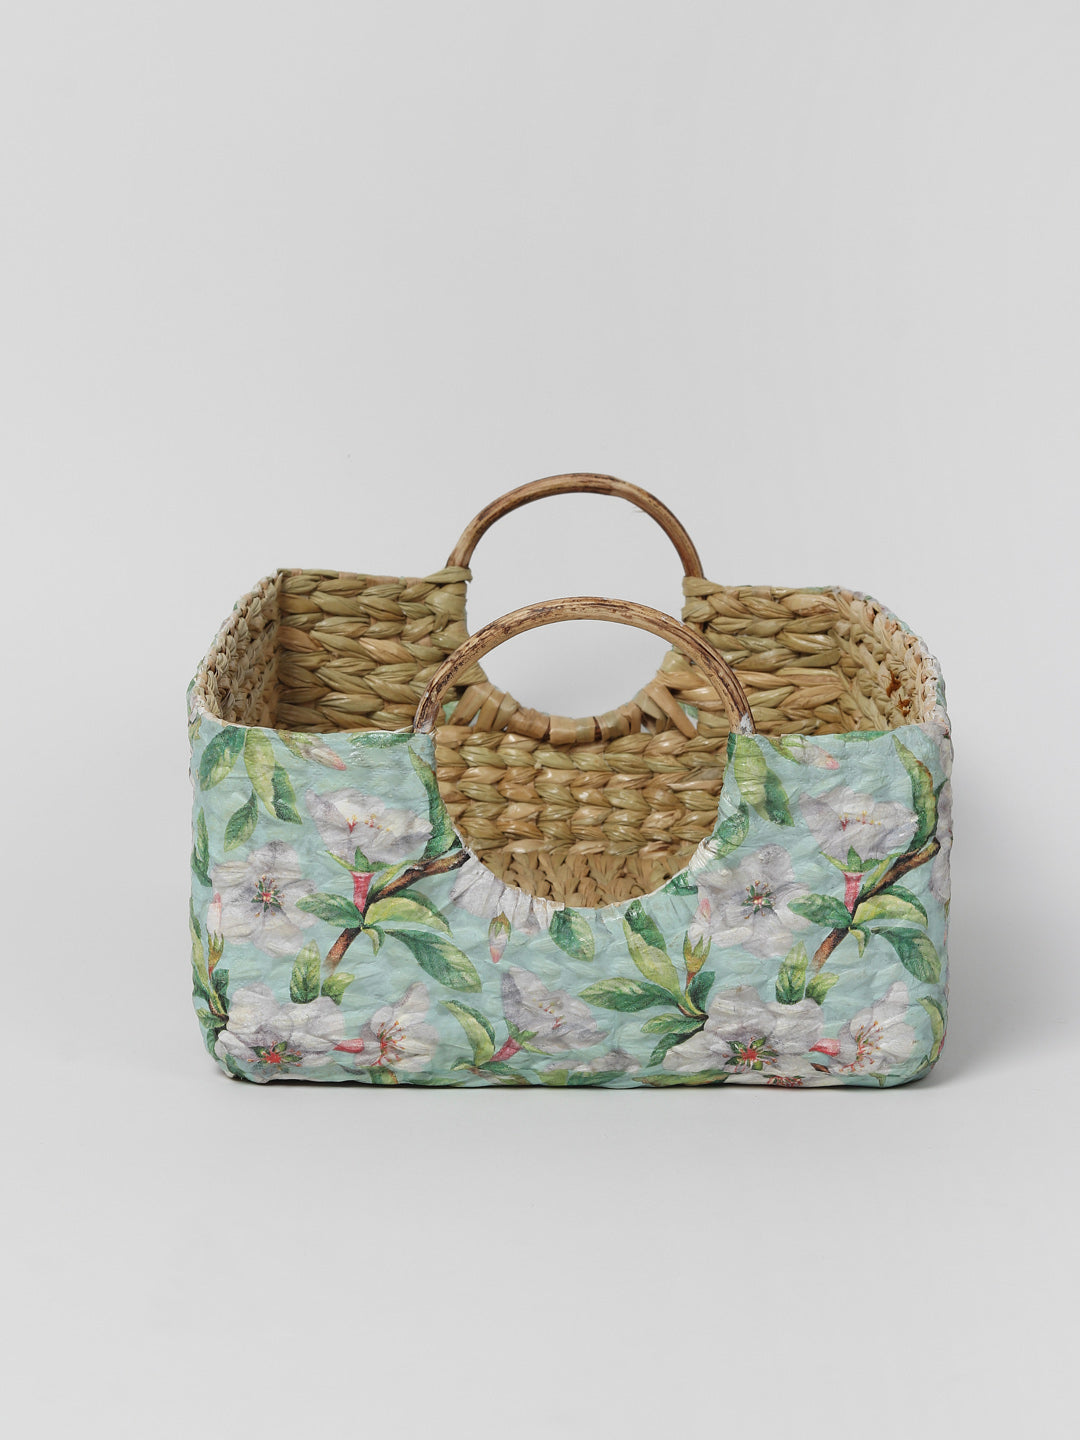 Seagrass Round Handle Basket | Hamper Basket